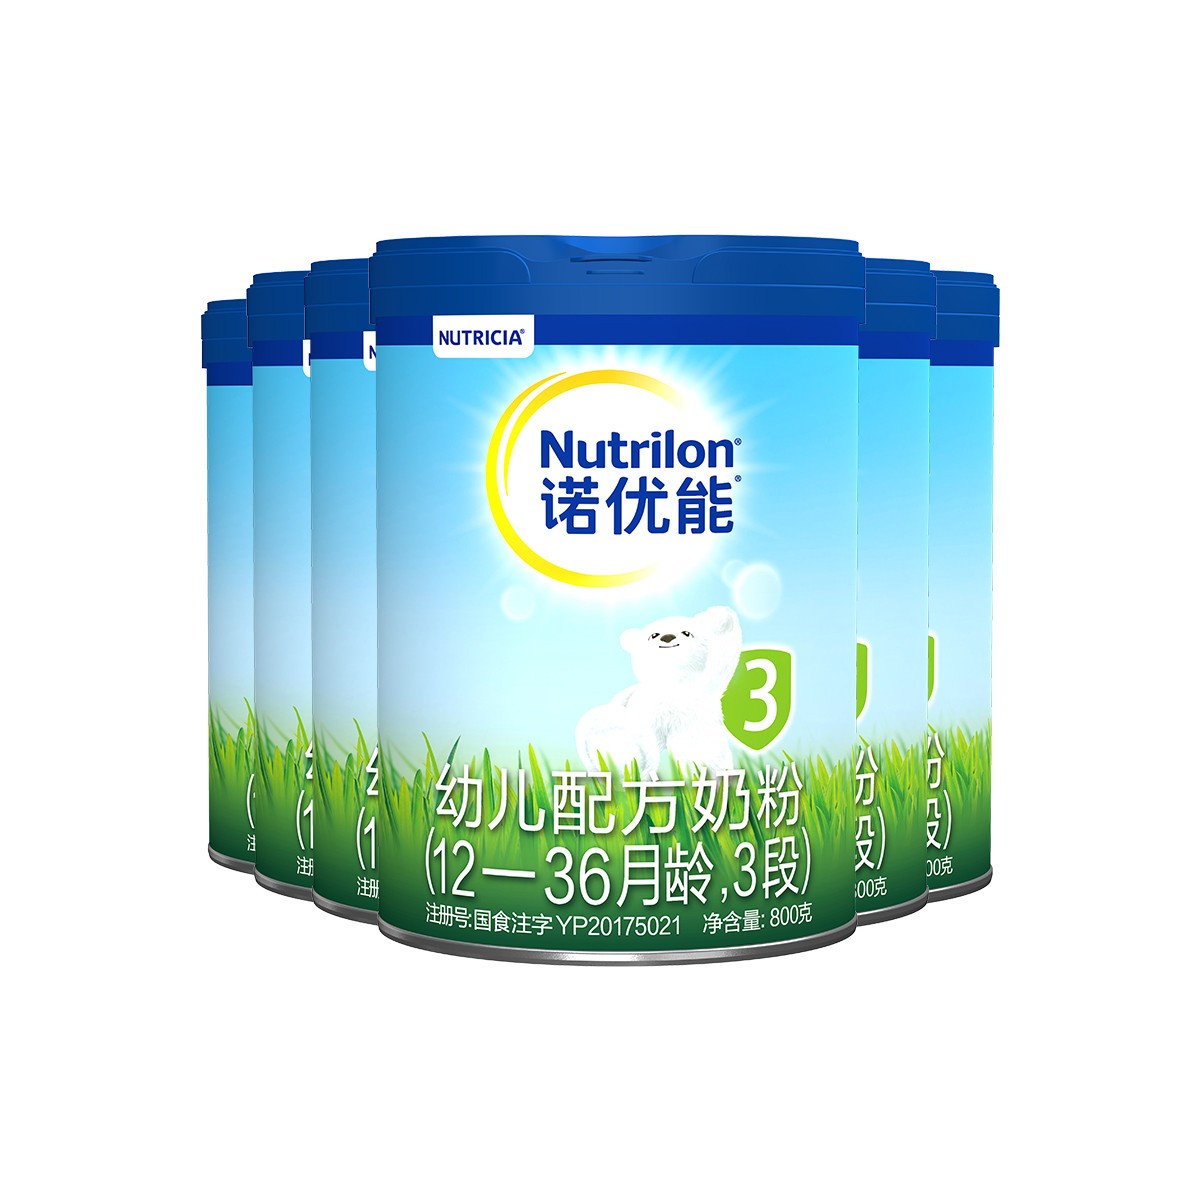 Nutrilon 诺优能 活力蓝罐（Nutrilon）幼儿配方奶粉（12—36月龄 3段）800g*6听 1008元